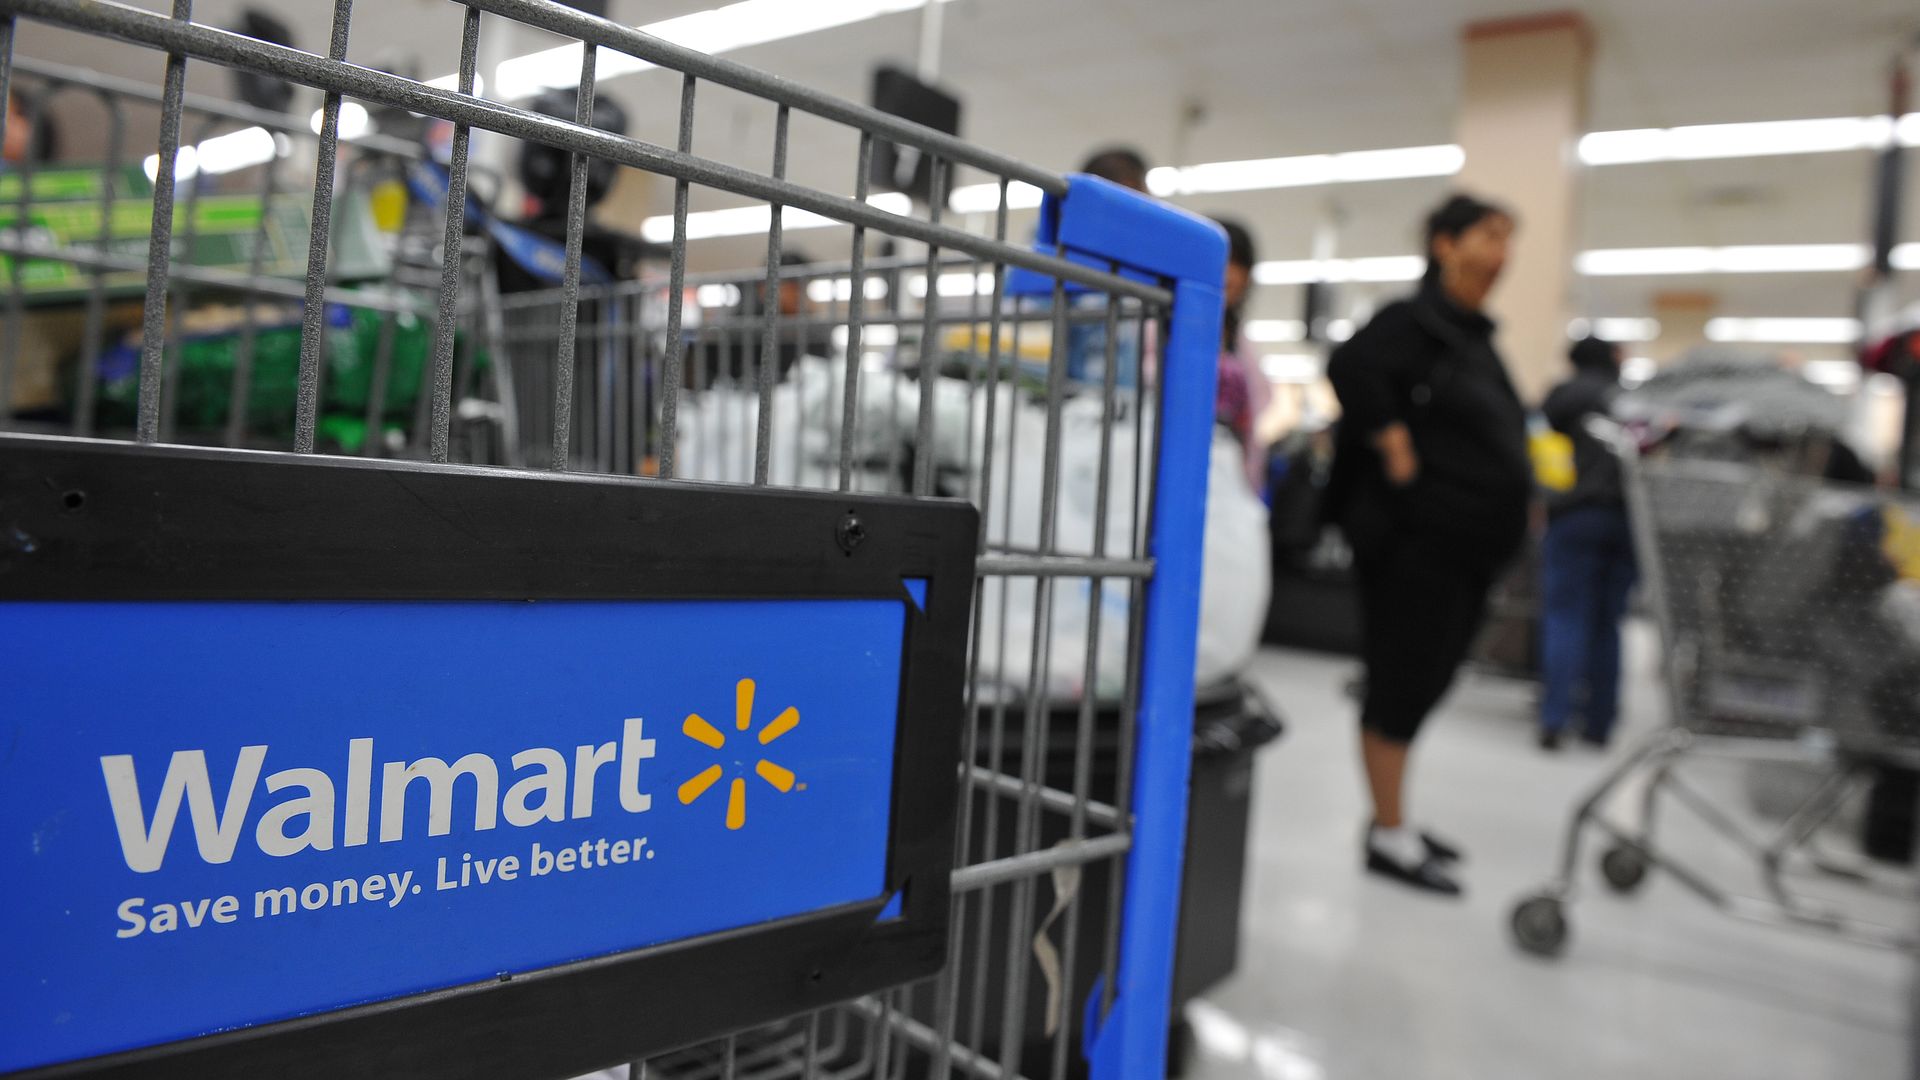 Walmart's logo on a shopping cart.